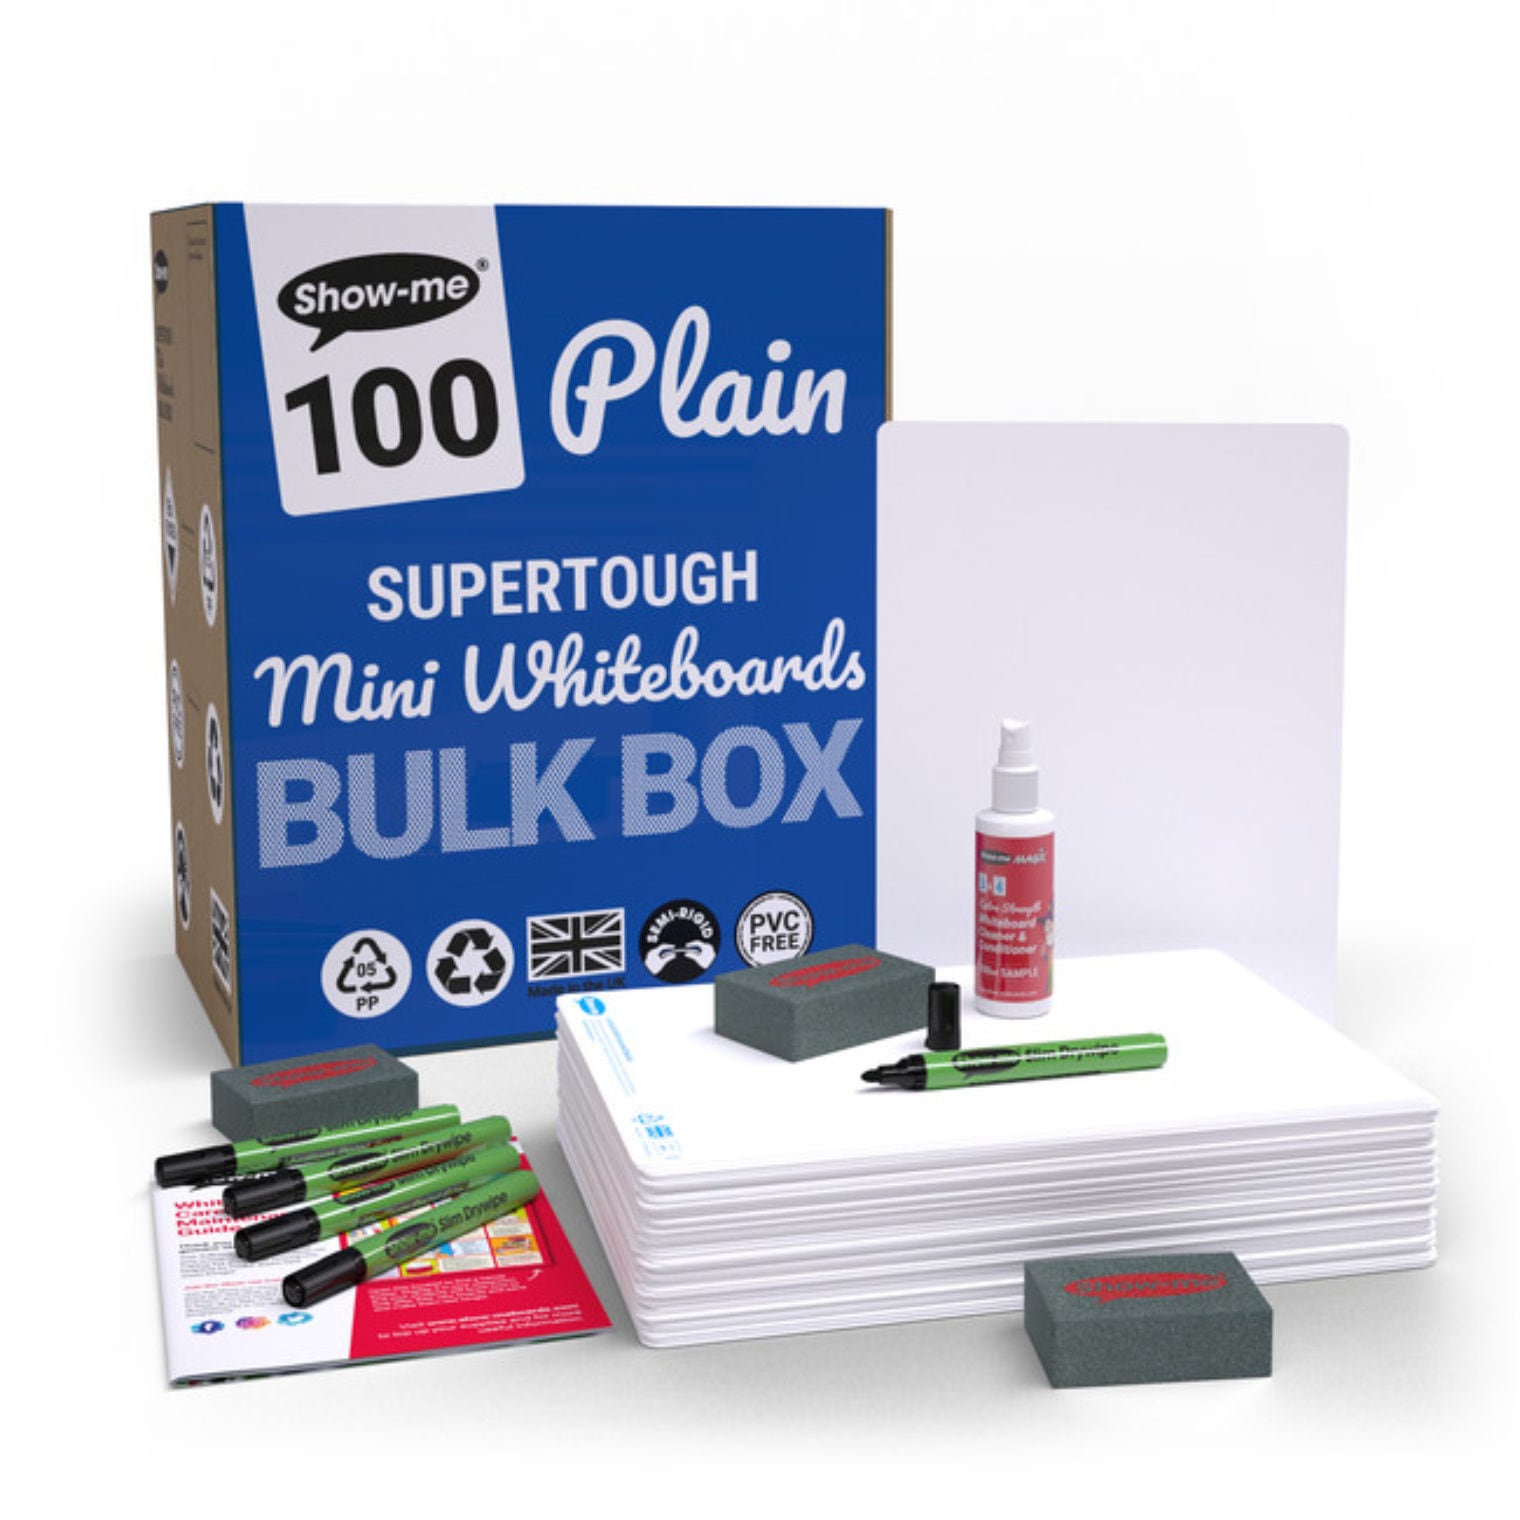 Show-me Plain Supertough Bulk pack